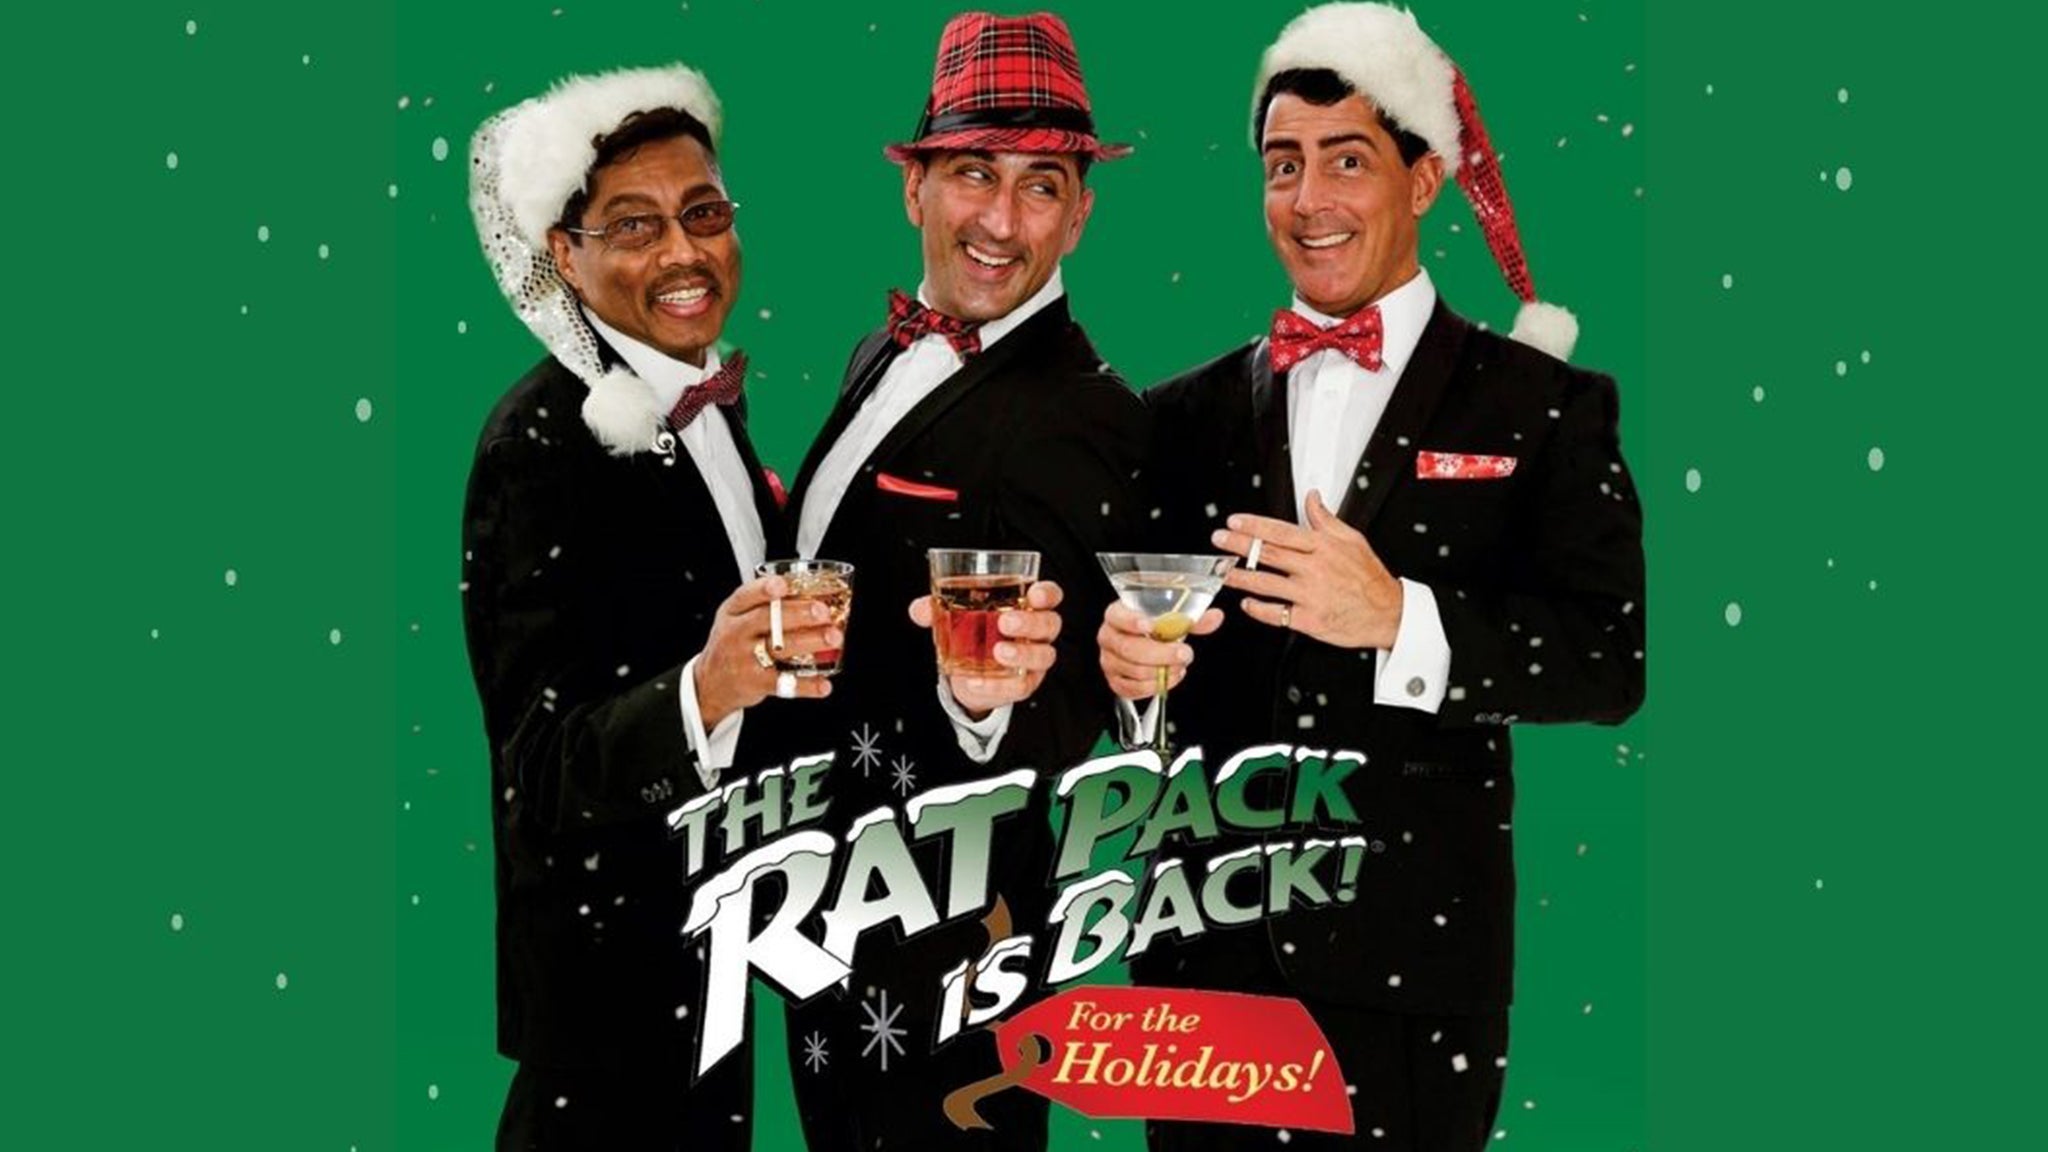 The Rat Pack is Back for The Holidays! presale information on freepresalepasswords.com